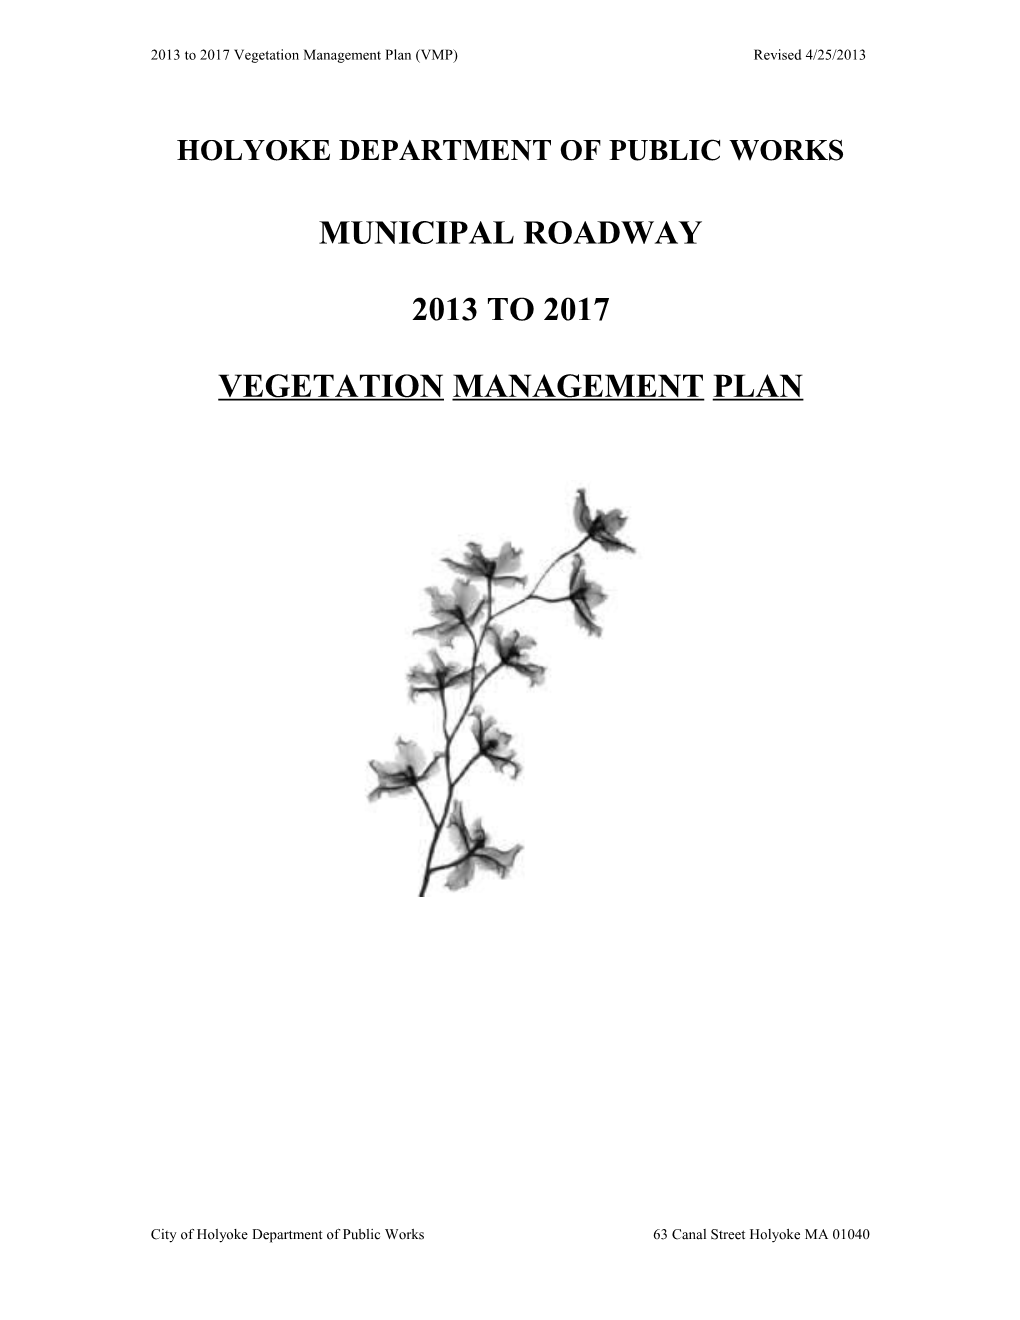 2003 to 2007 Vegetation Management Plan (VMP) Holyoke Department of Public Works